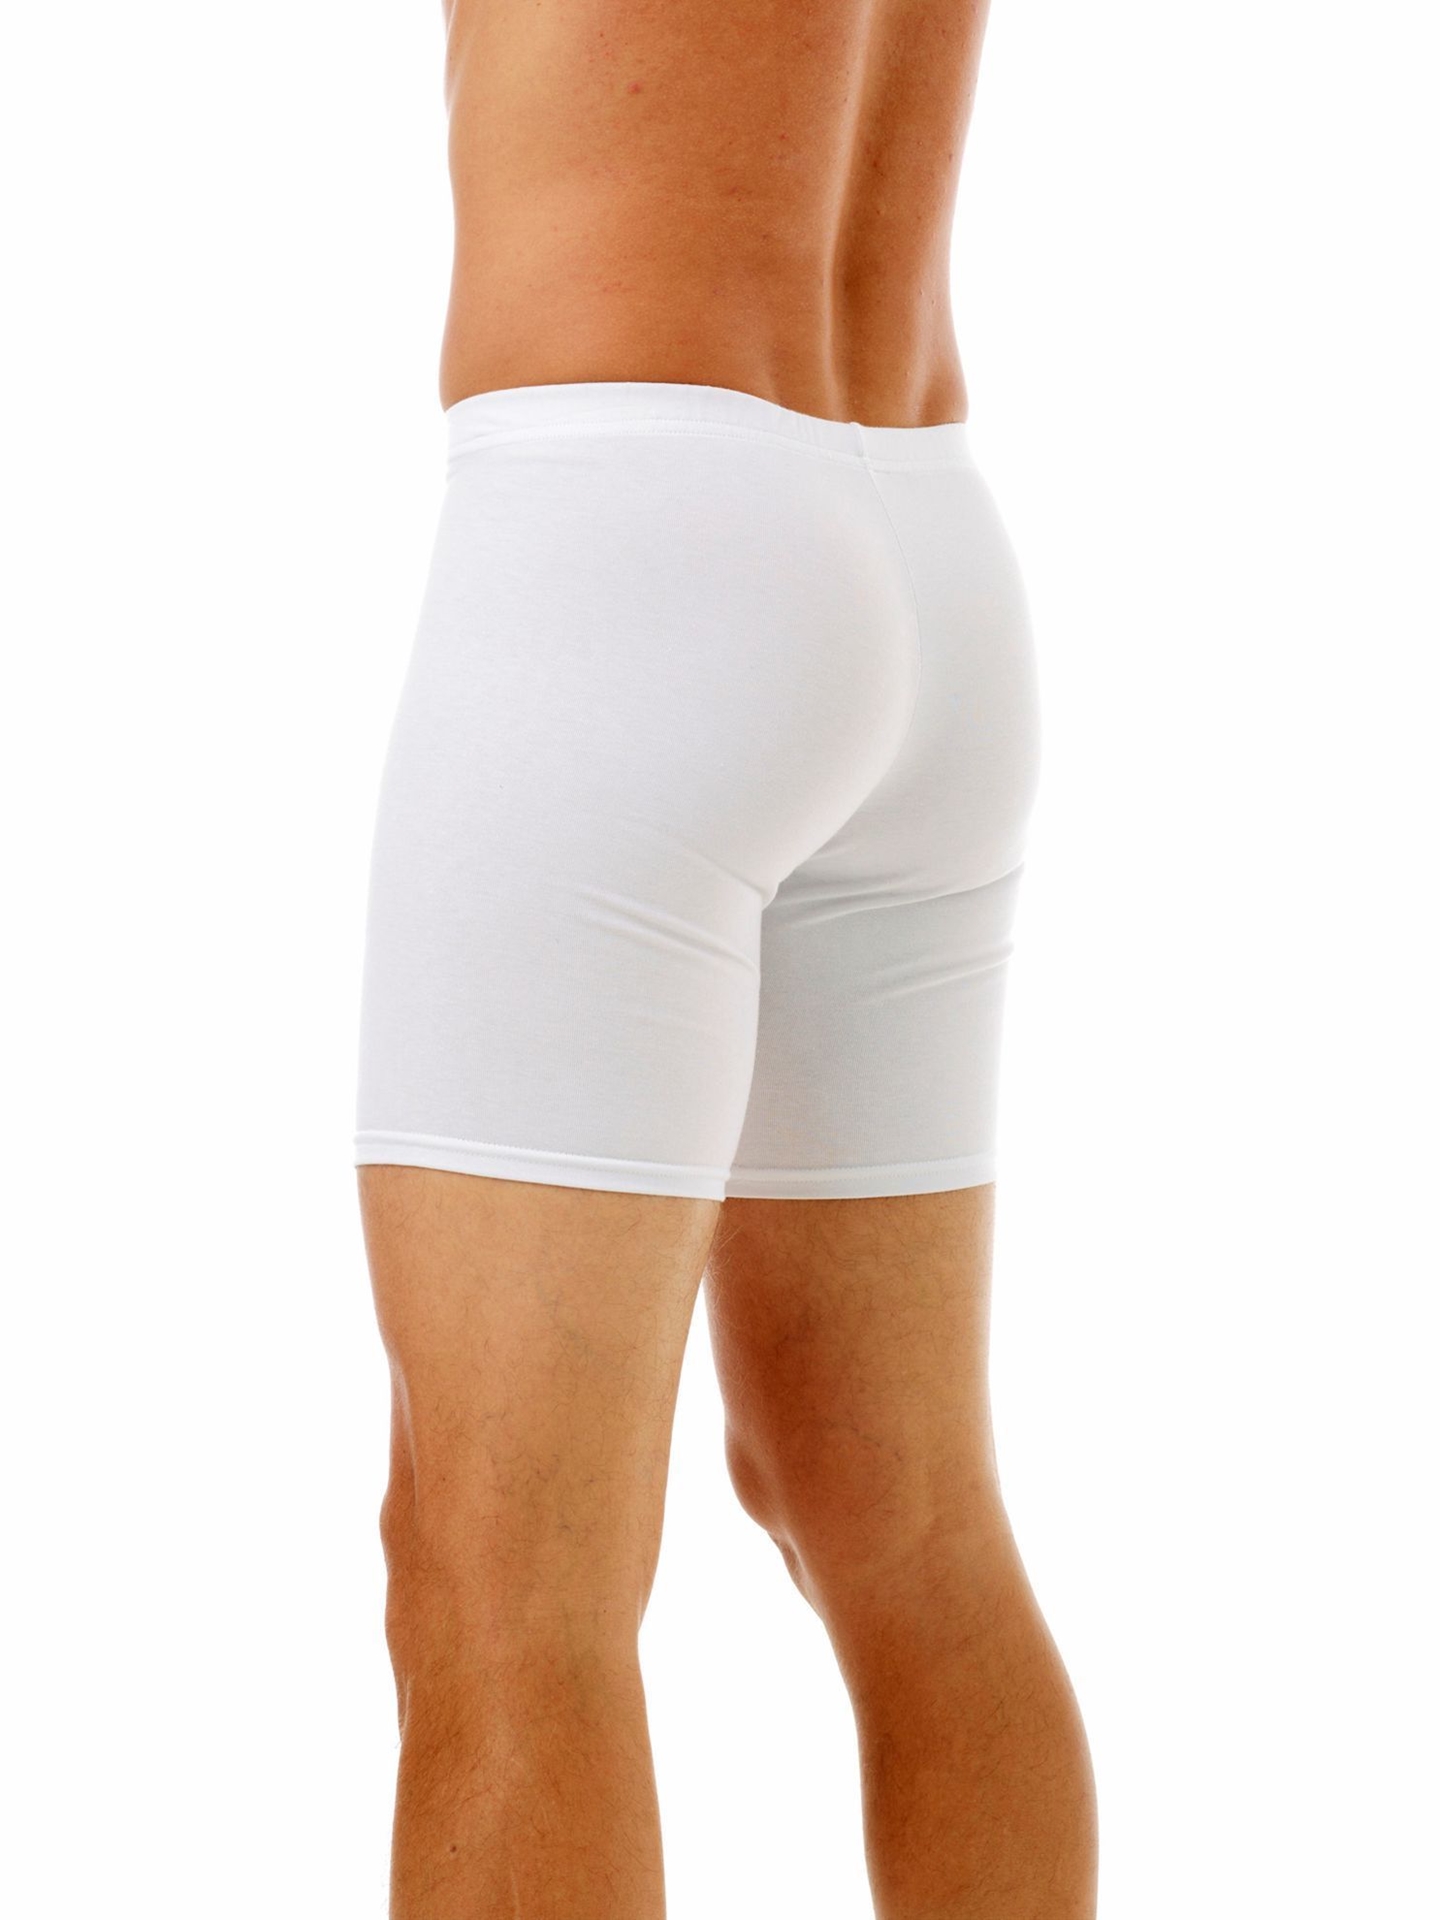 SLEEFS Soft Men's Cotton Underwear, Boxer Briefs With Pouch Support at   Men's Clothing store